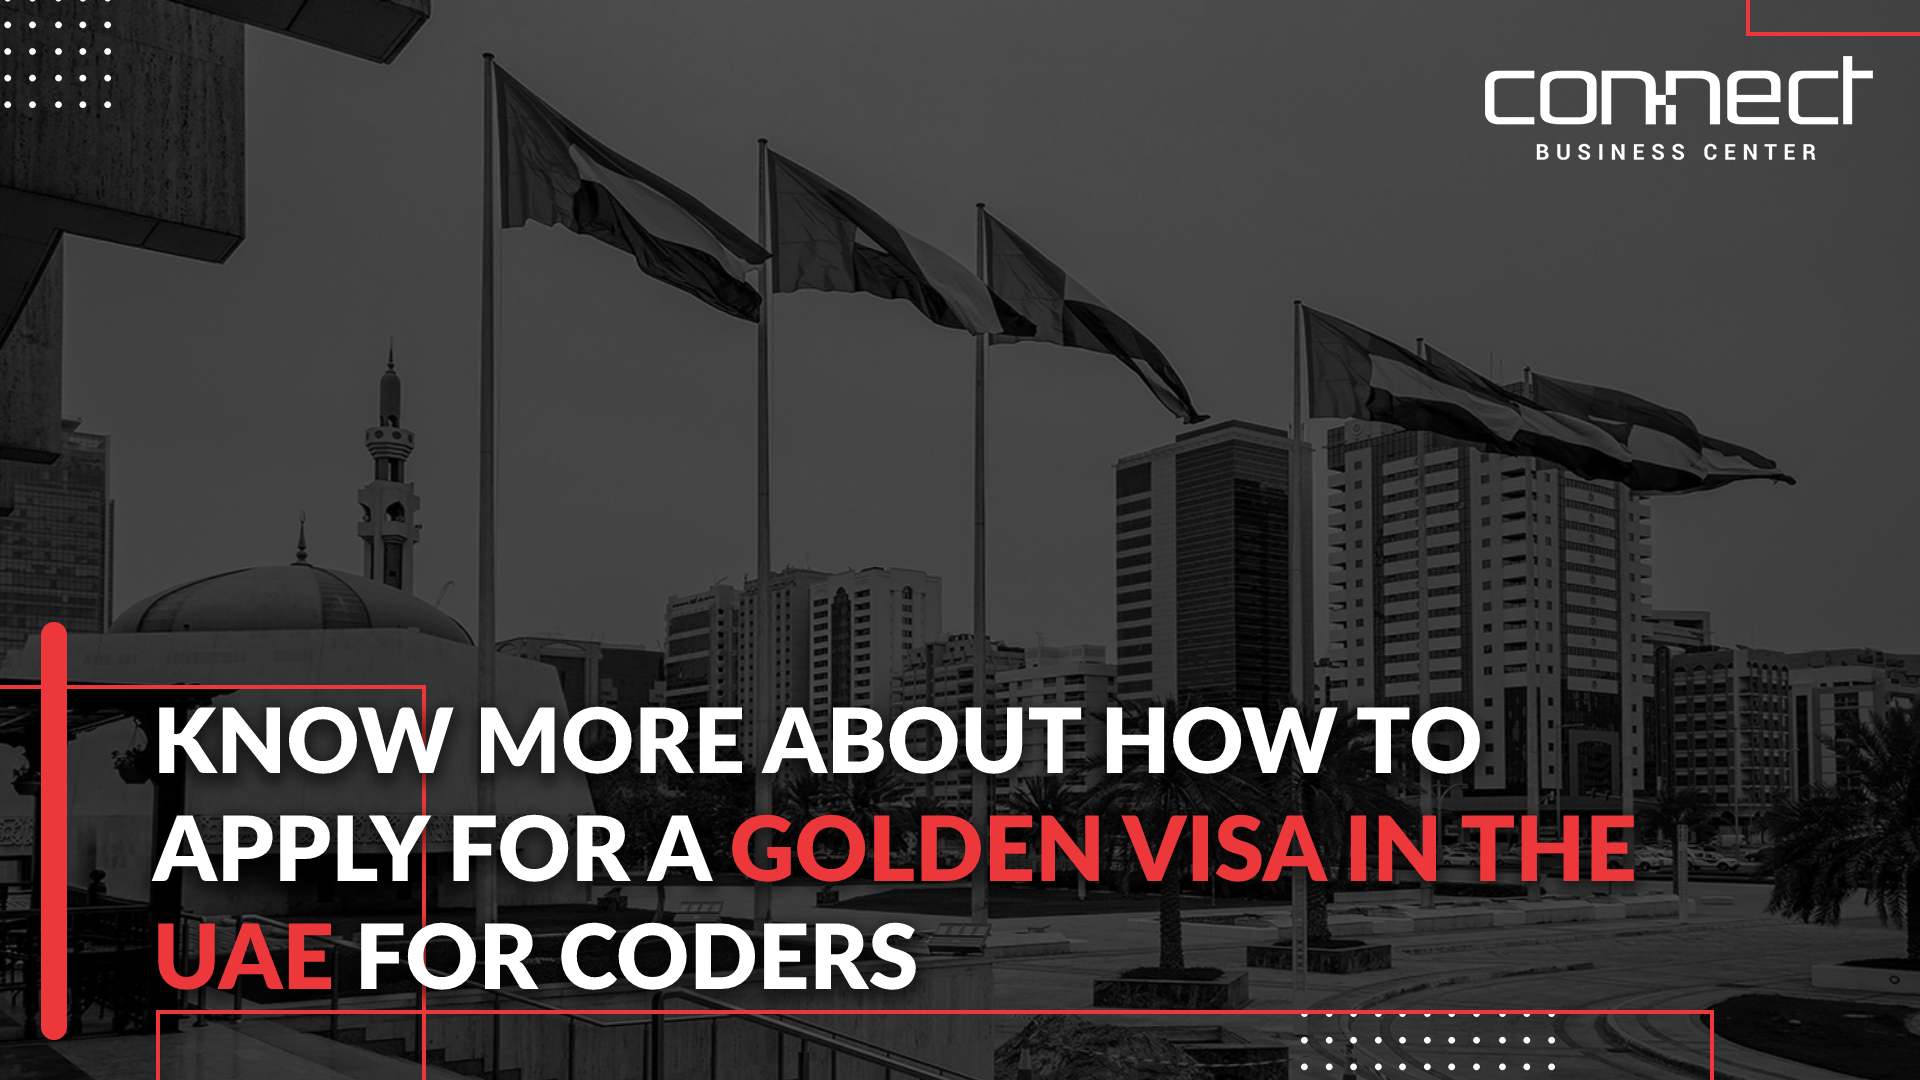 Golden visa in the UAE